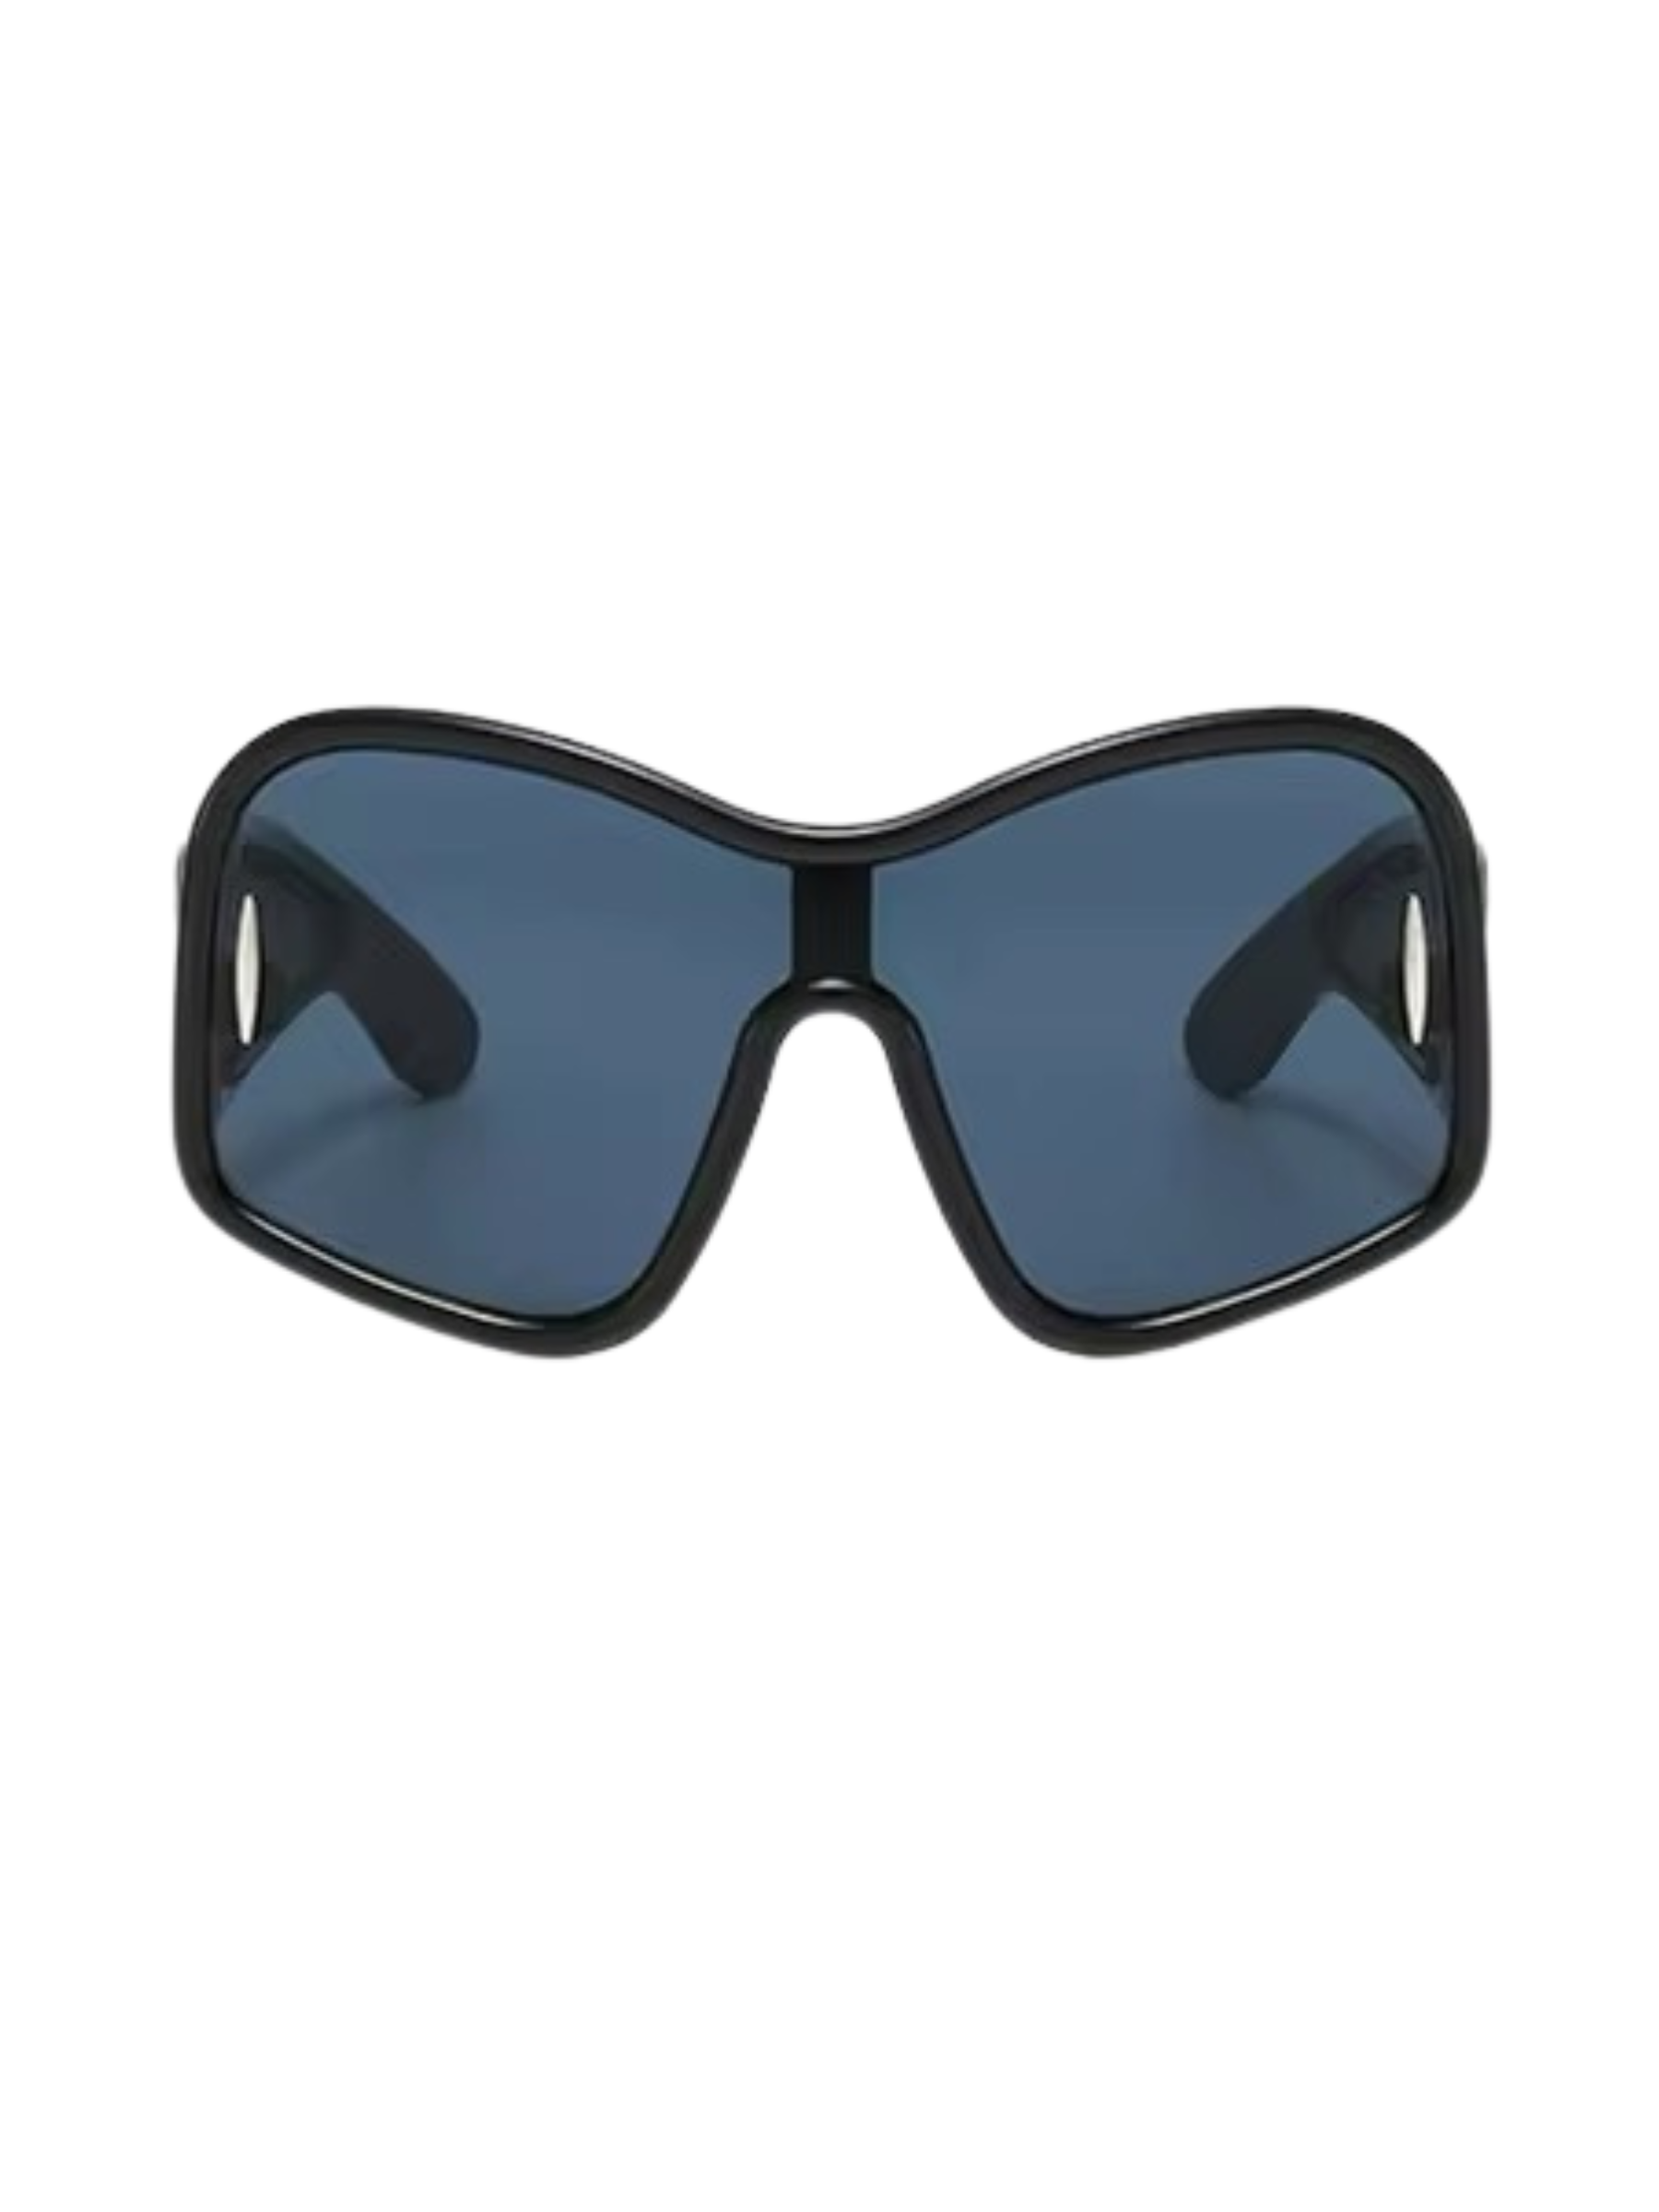 GOLDxTEAL black oversized fashion sunglasses.